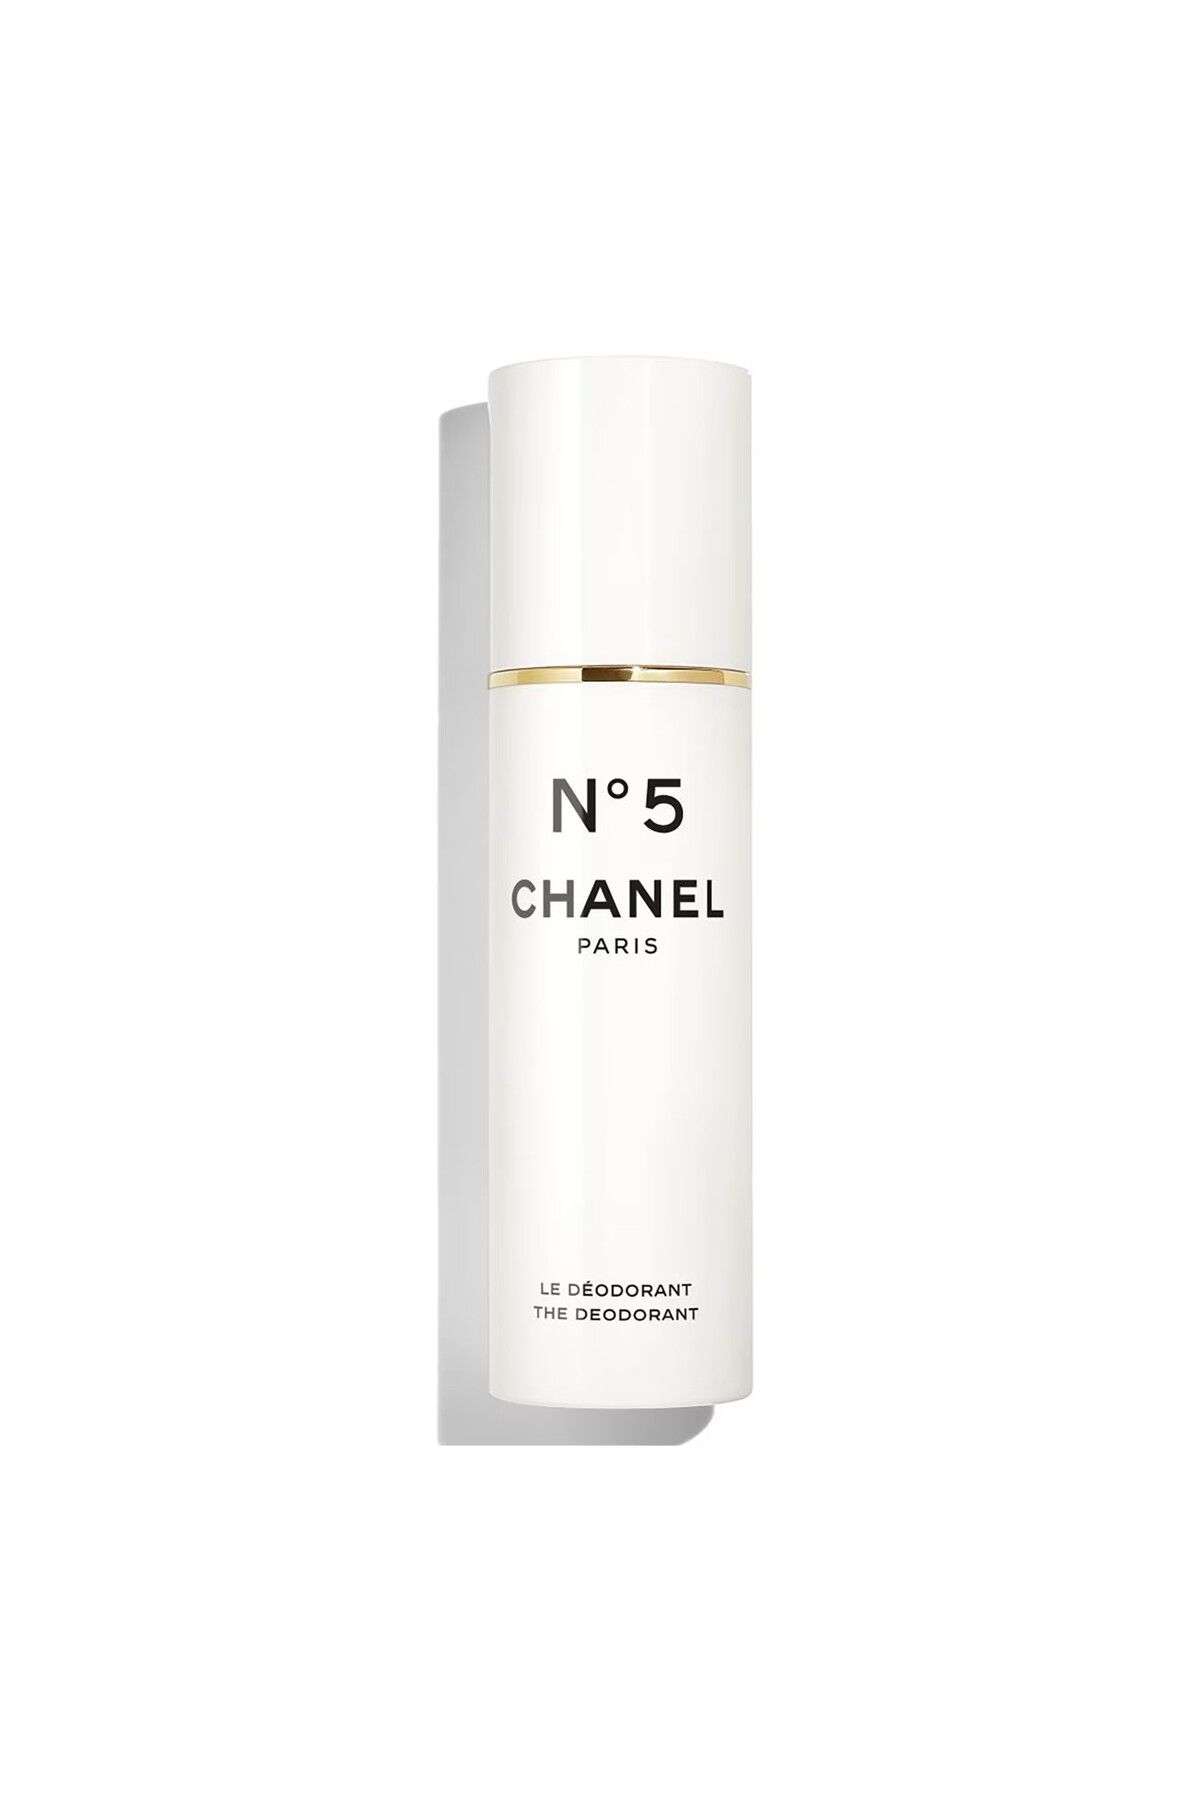 Chanel دئودورانت اسپری N°5 با نت‌های گلدار قوی زنانه 100 میل